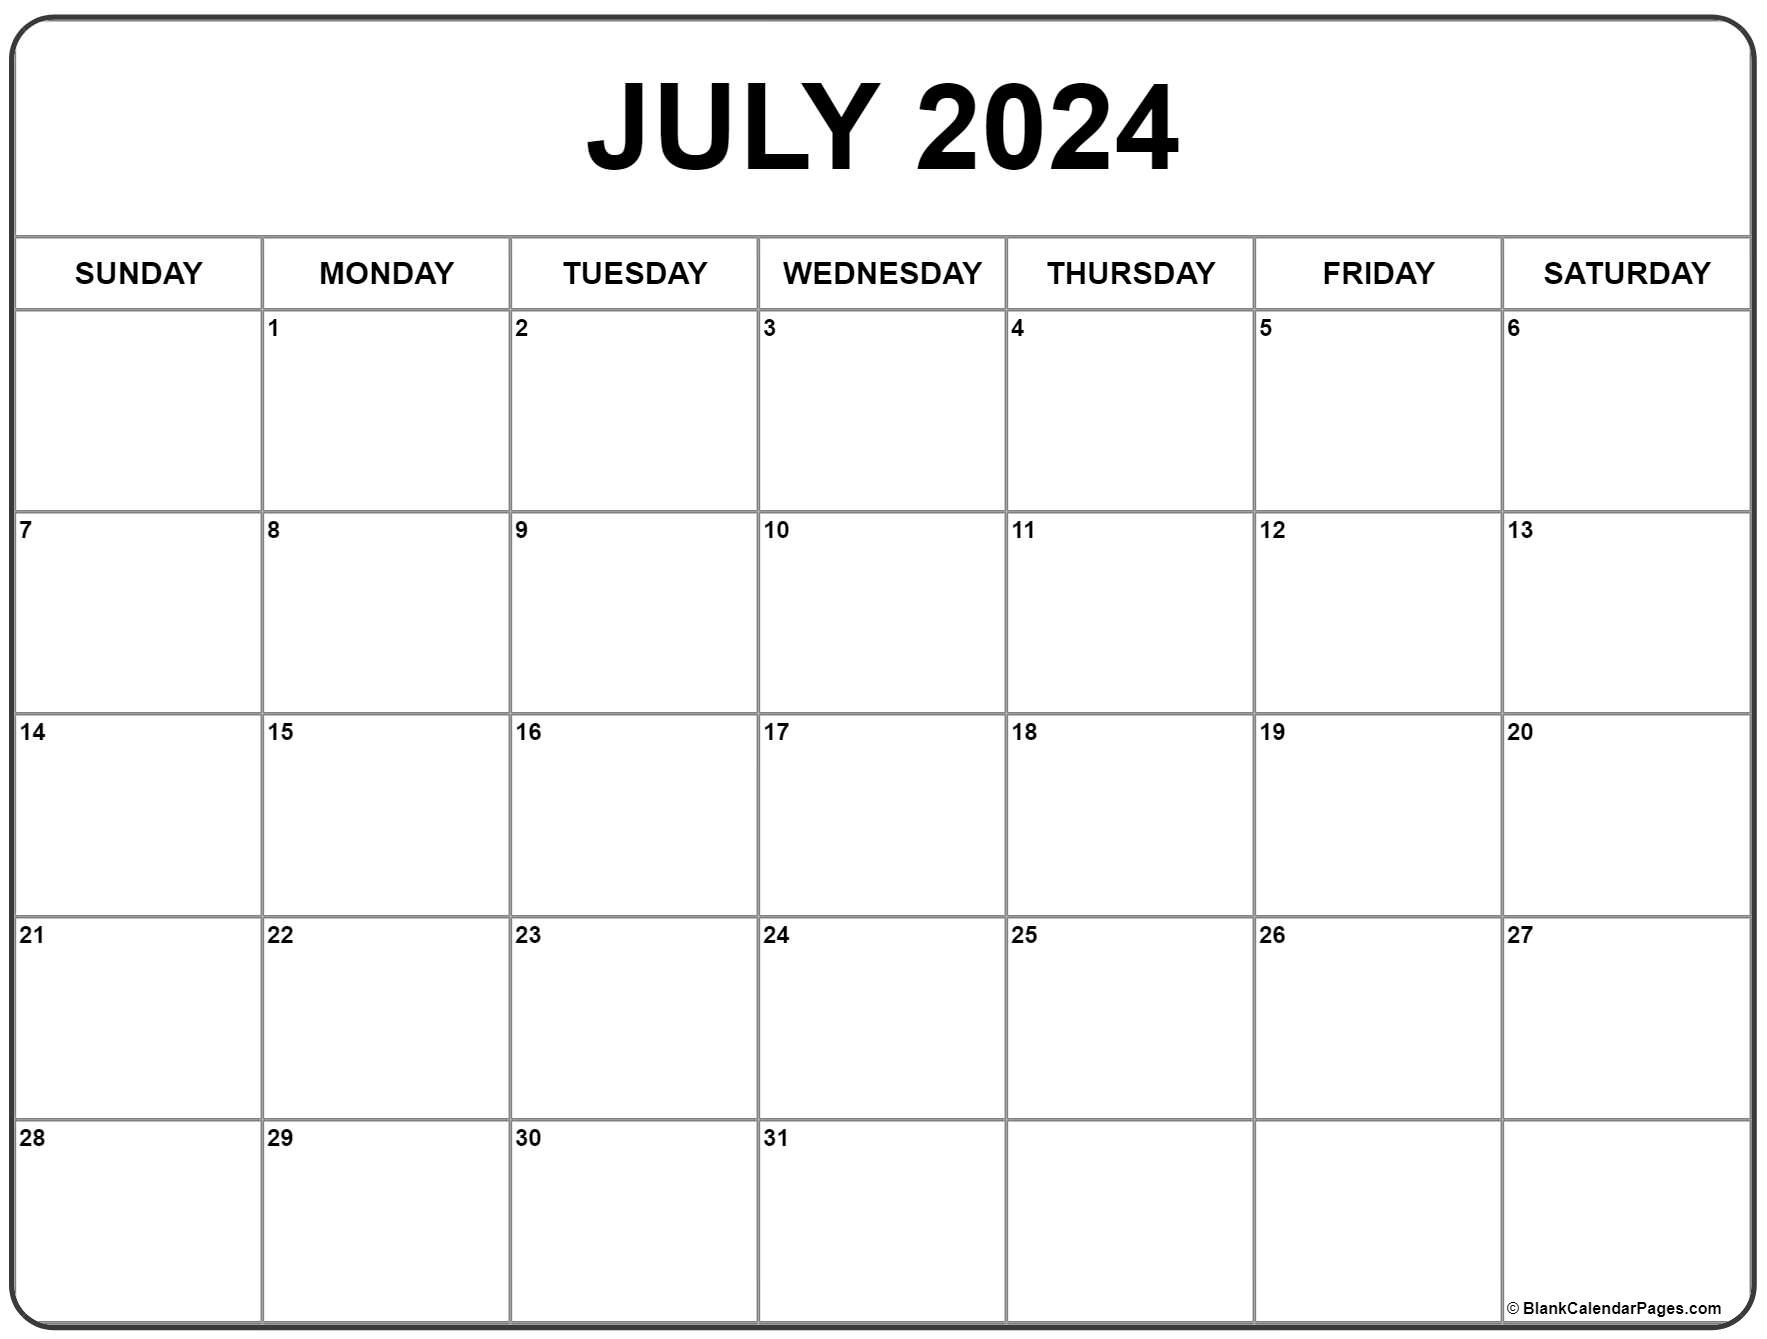 July 2024 Calendar | Free Printable Calendar for July 2024 Calendar Free Printable